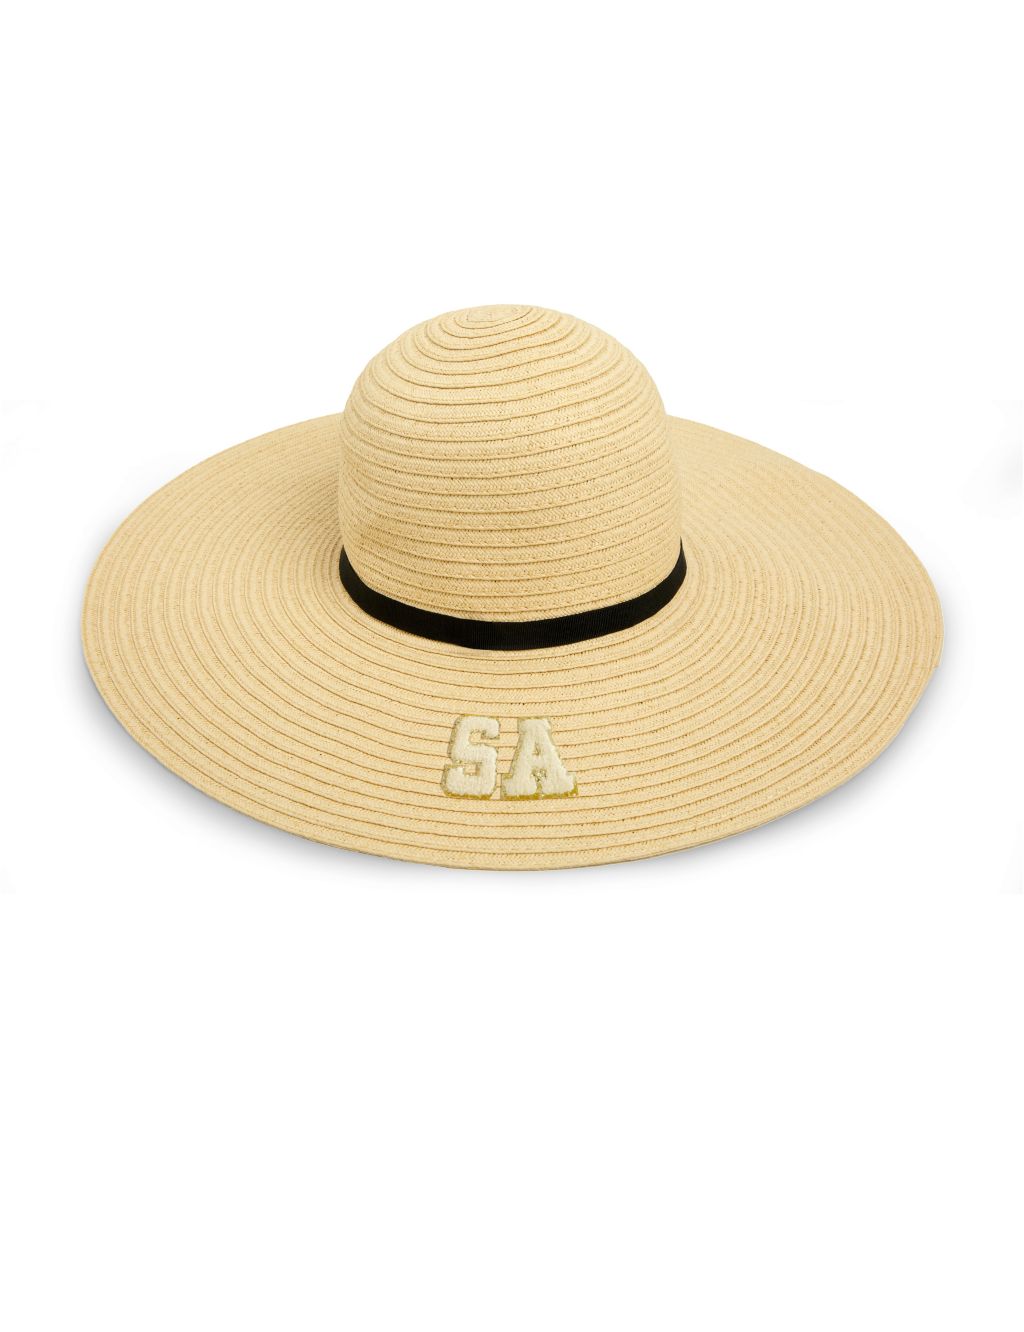 Personalised Sun Hat image 1